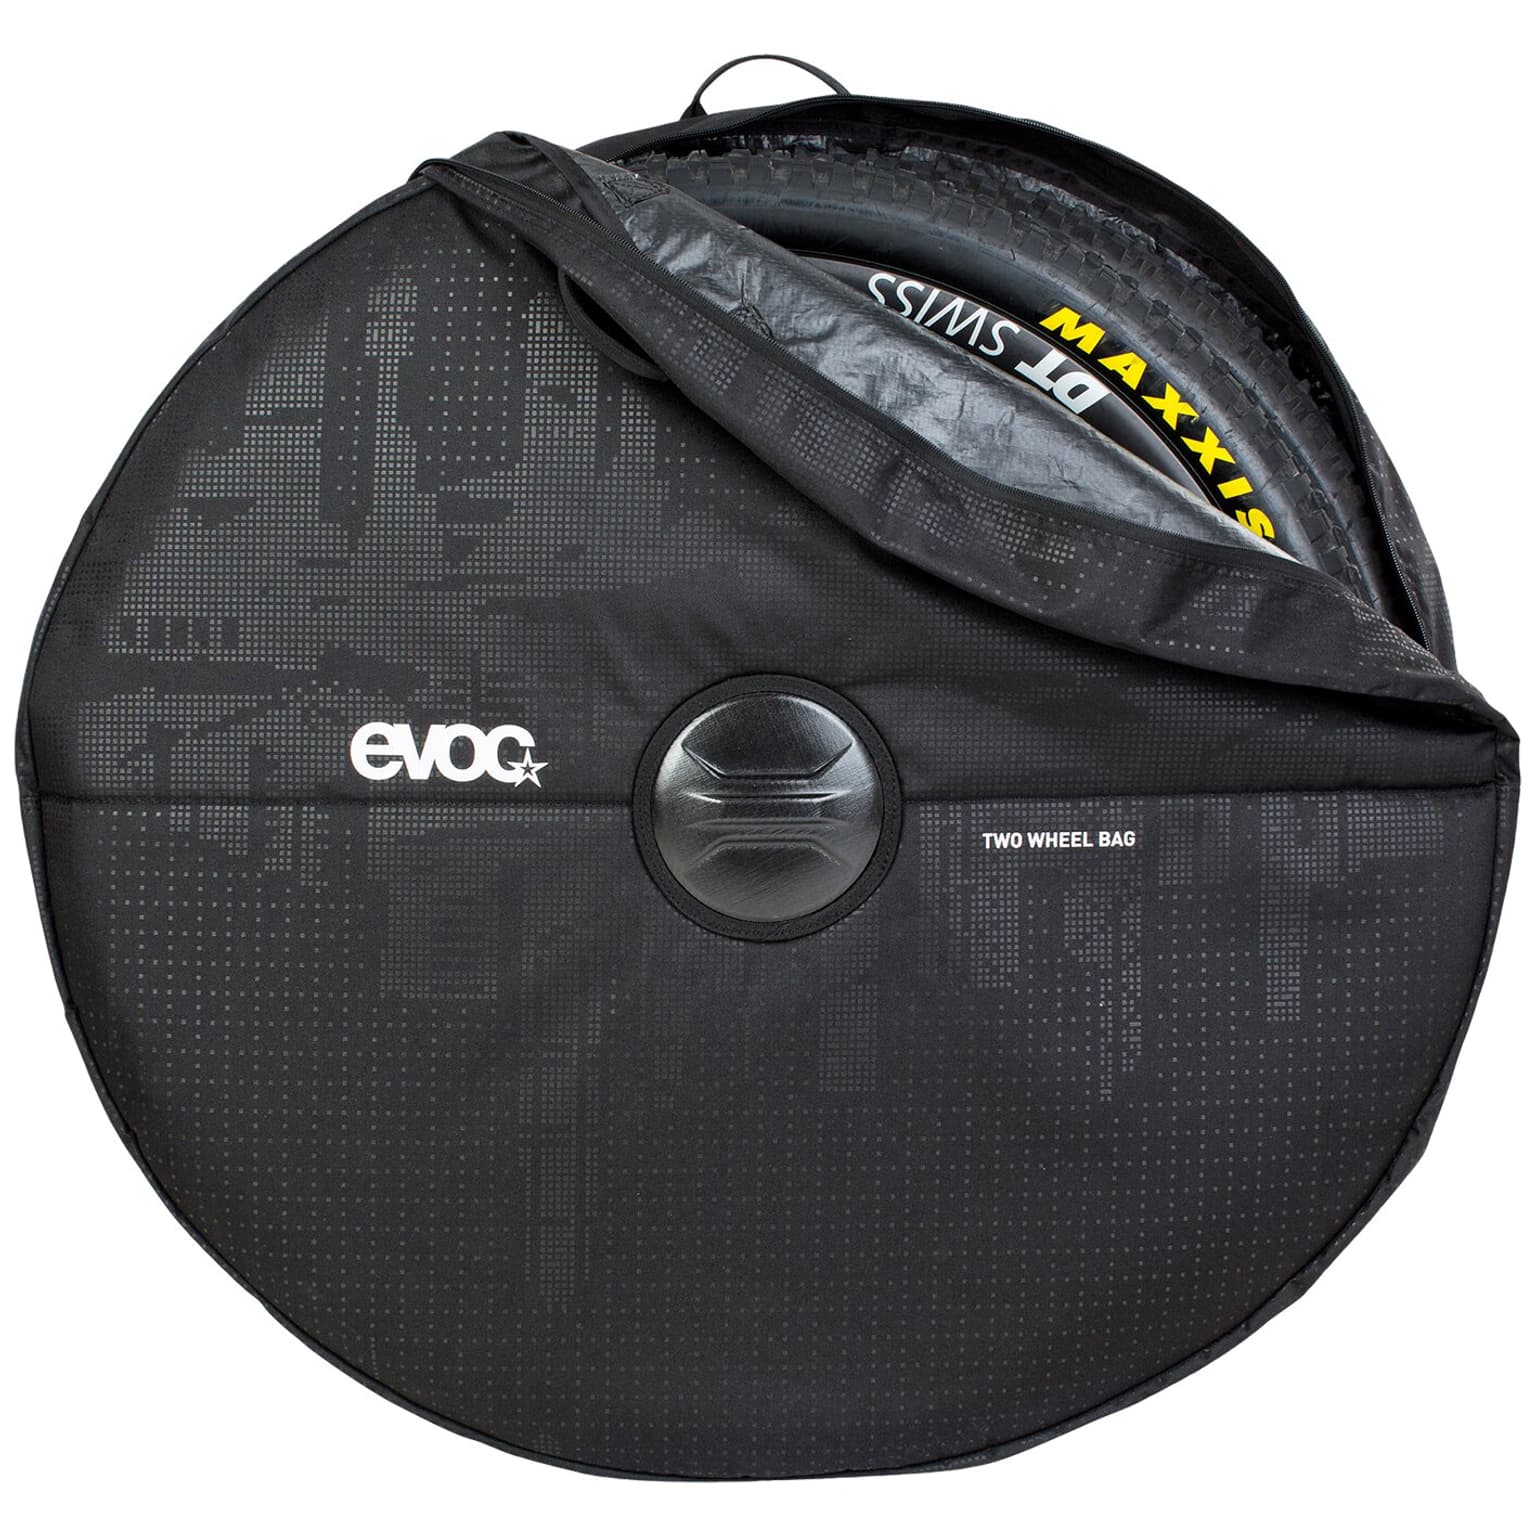 Evoc Evoc Two Wheel Bag Transporttasche 2